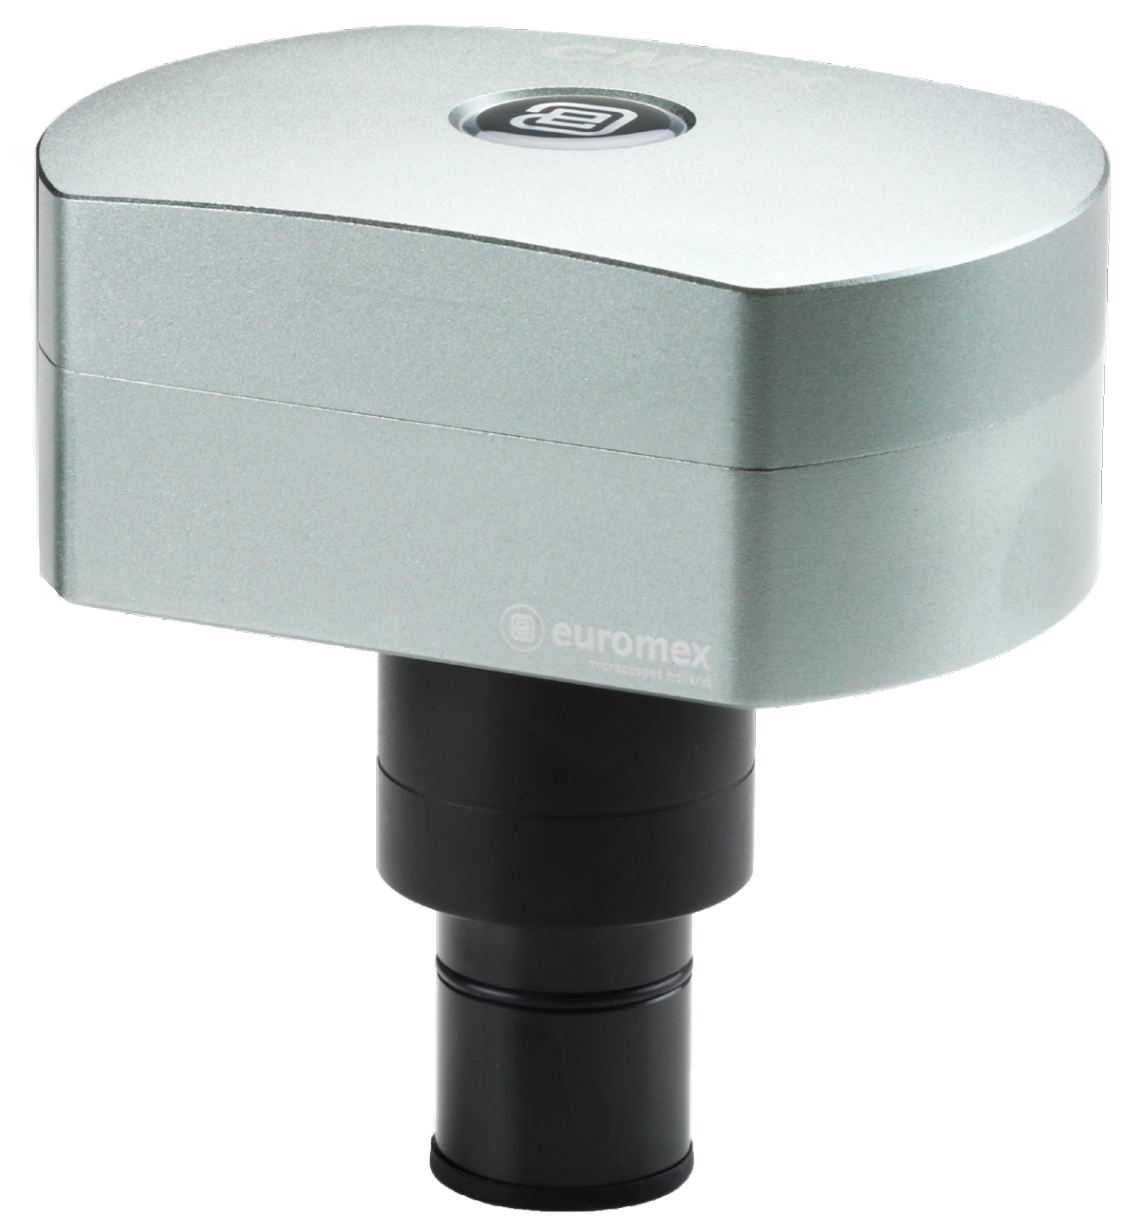 Microscope, กล้องจุลทรรศน์, Euromex, Q-scope, กล้อง 2 กระบอกตา, กล้อง 3 กระบอกตา